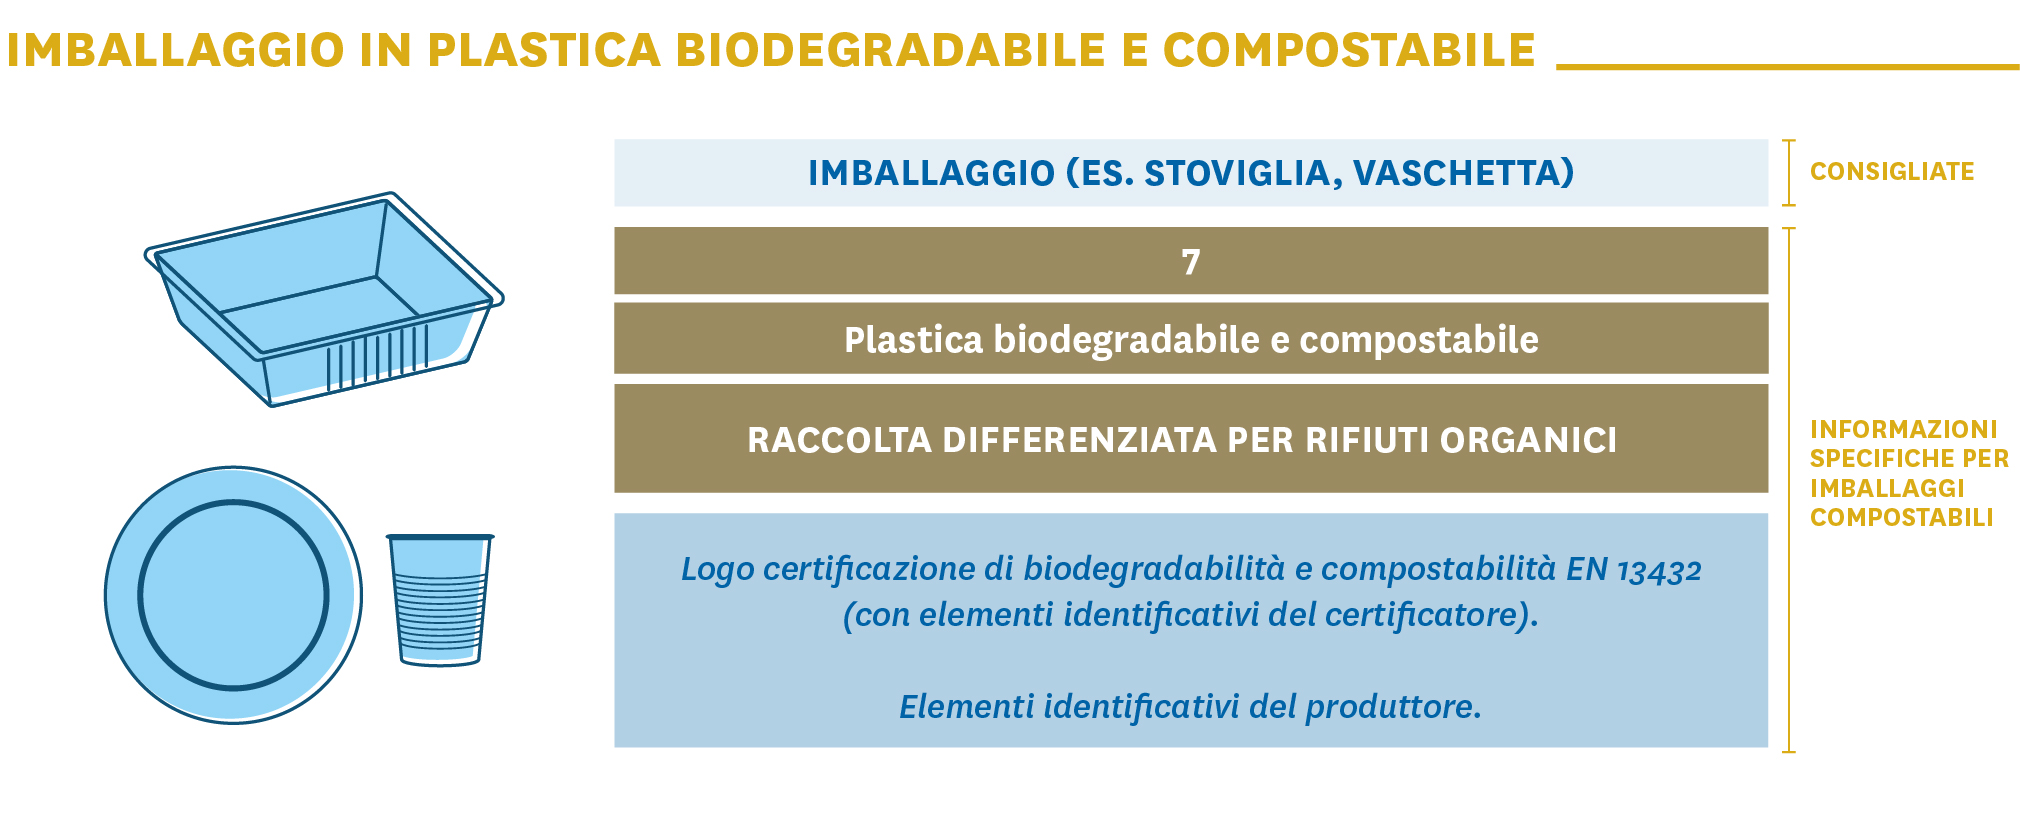 Imb in plastica biodegradabili